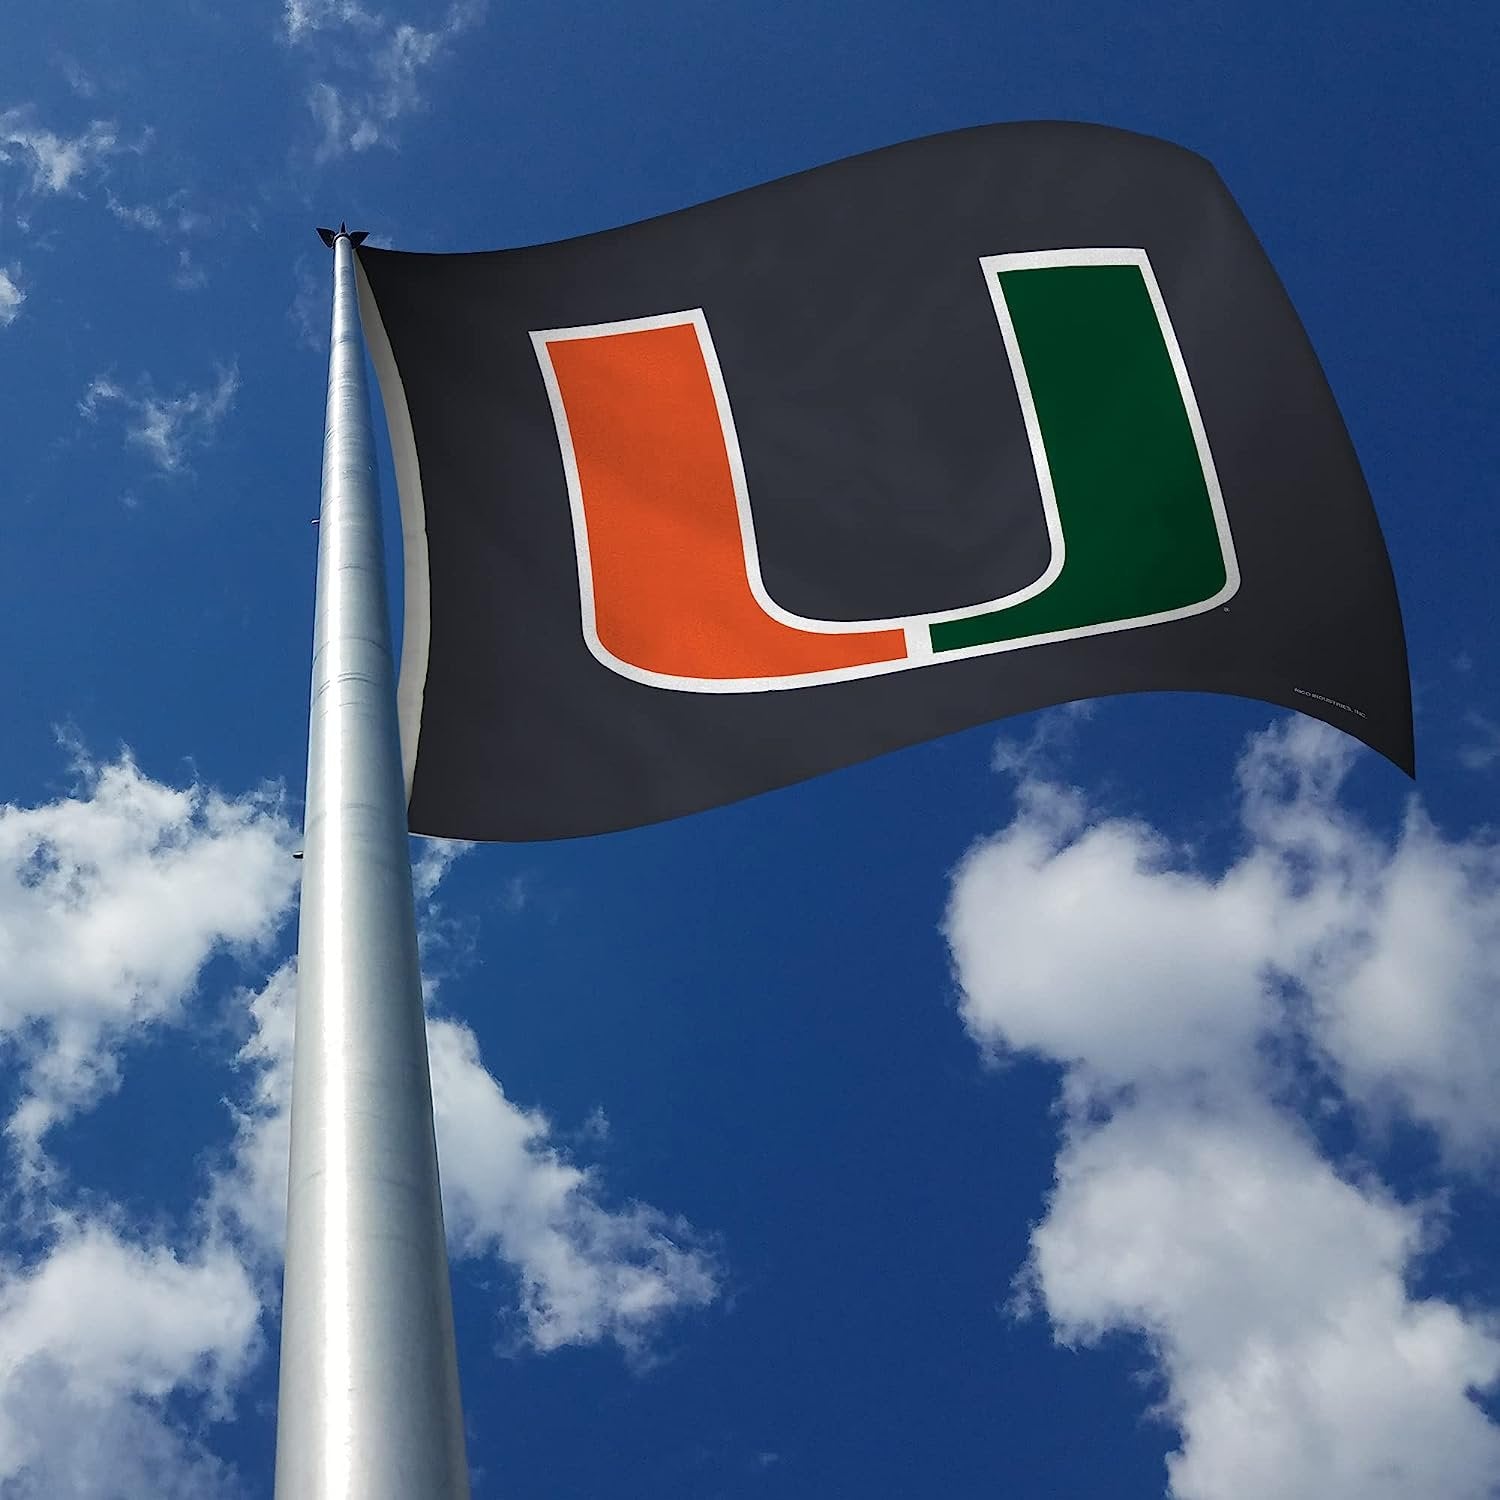 University of Miami Hurricanes Flag Banner 3x5 Feet Metal Grommets Grey Design